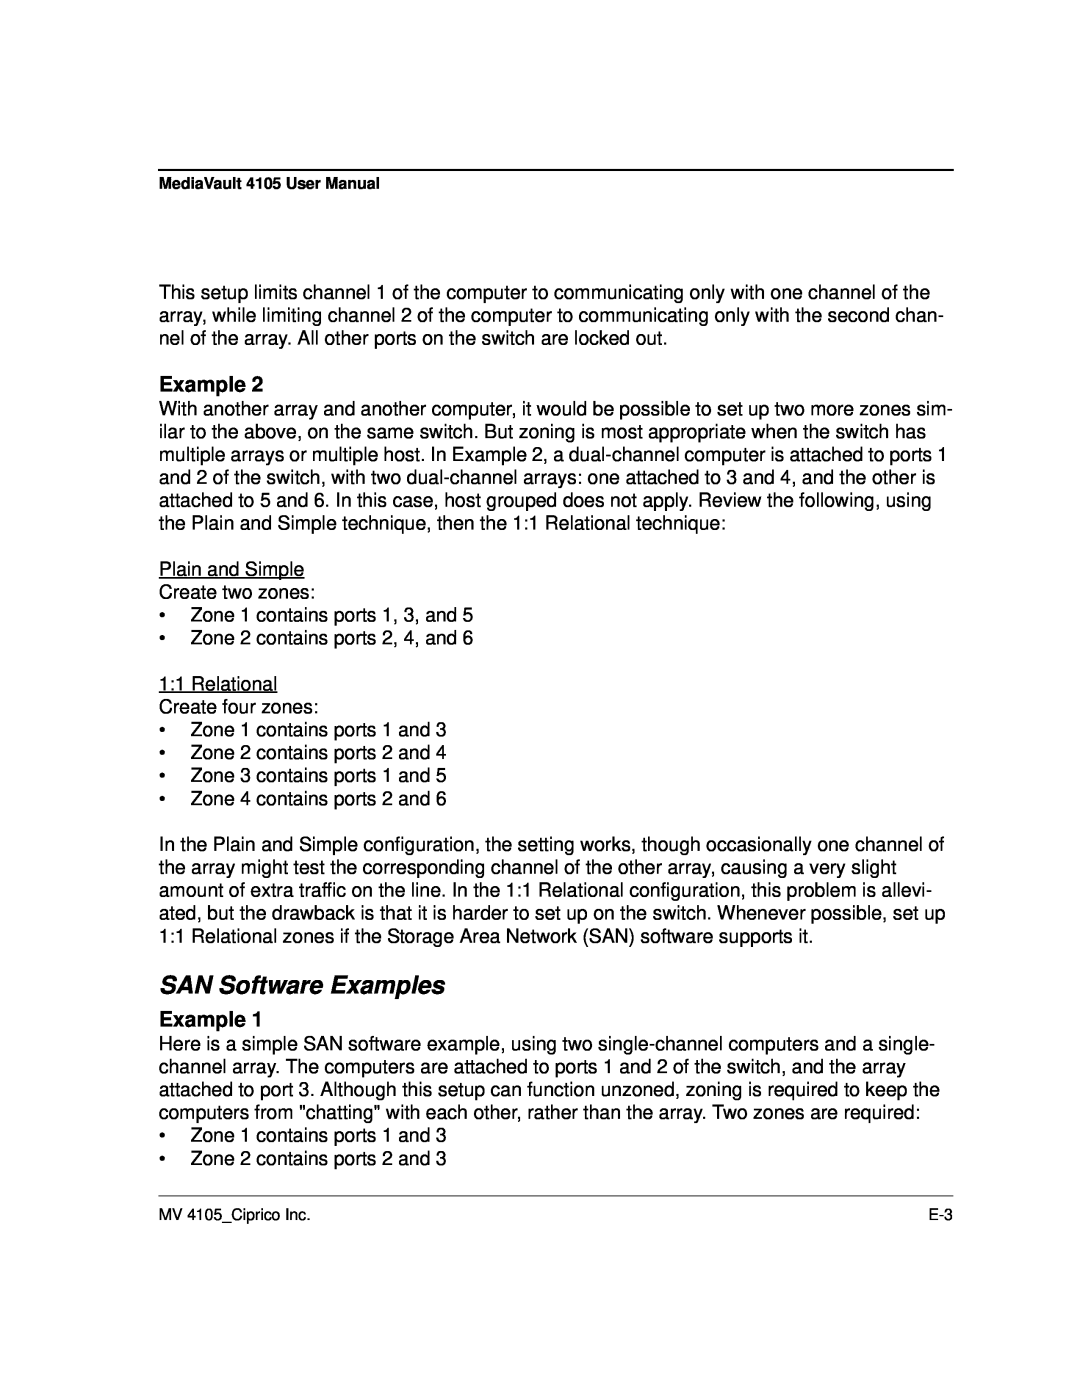 Ciprico 4105 Series user manual SAN Software Examples 